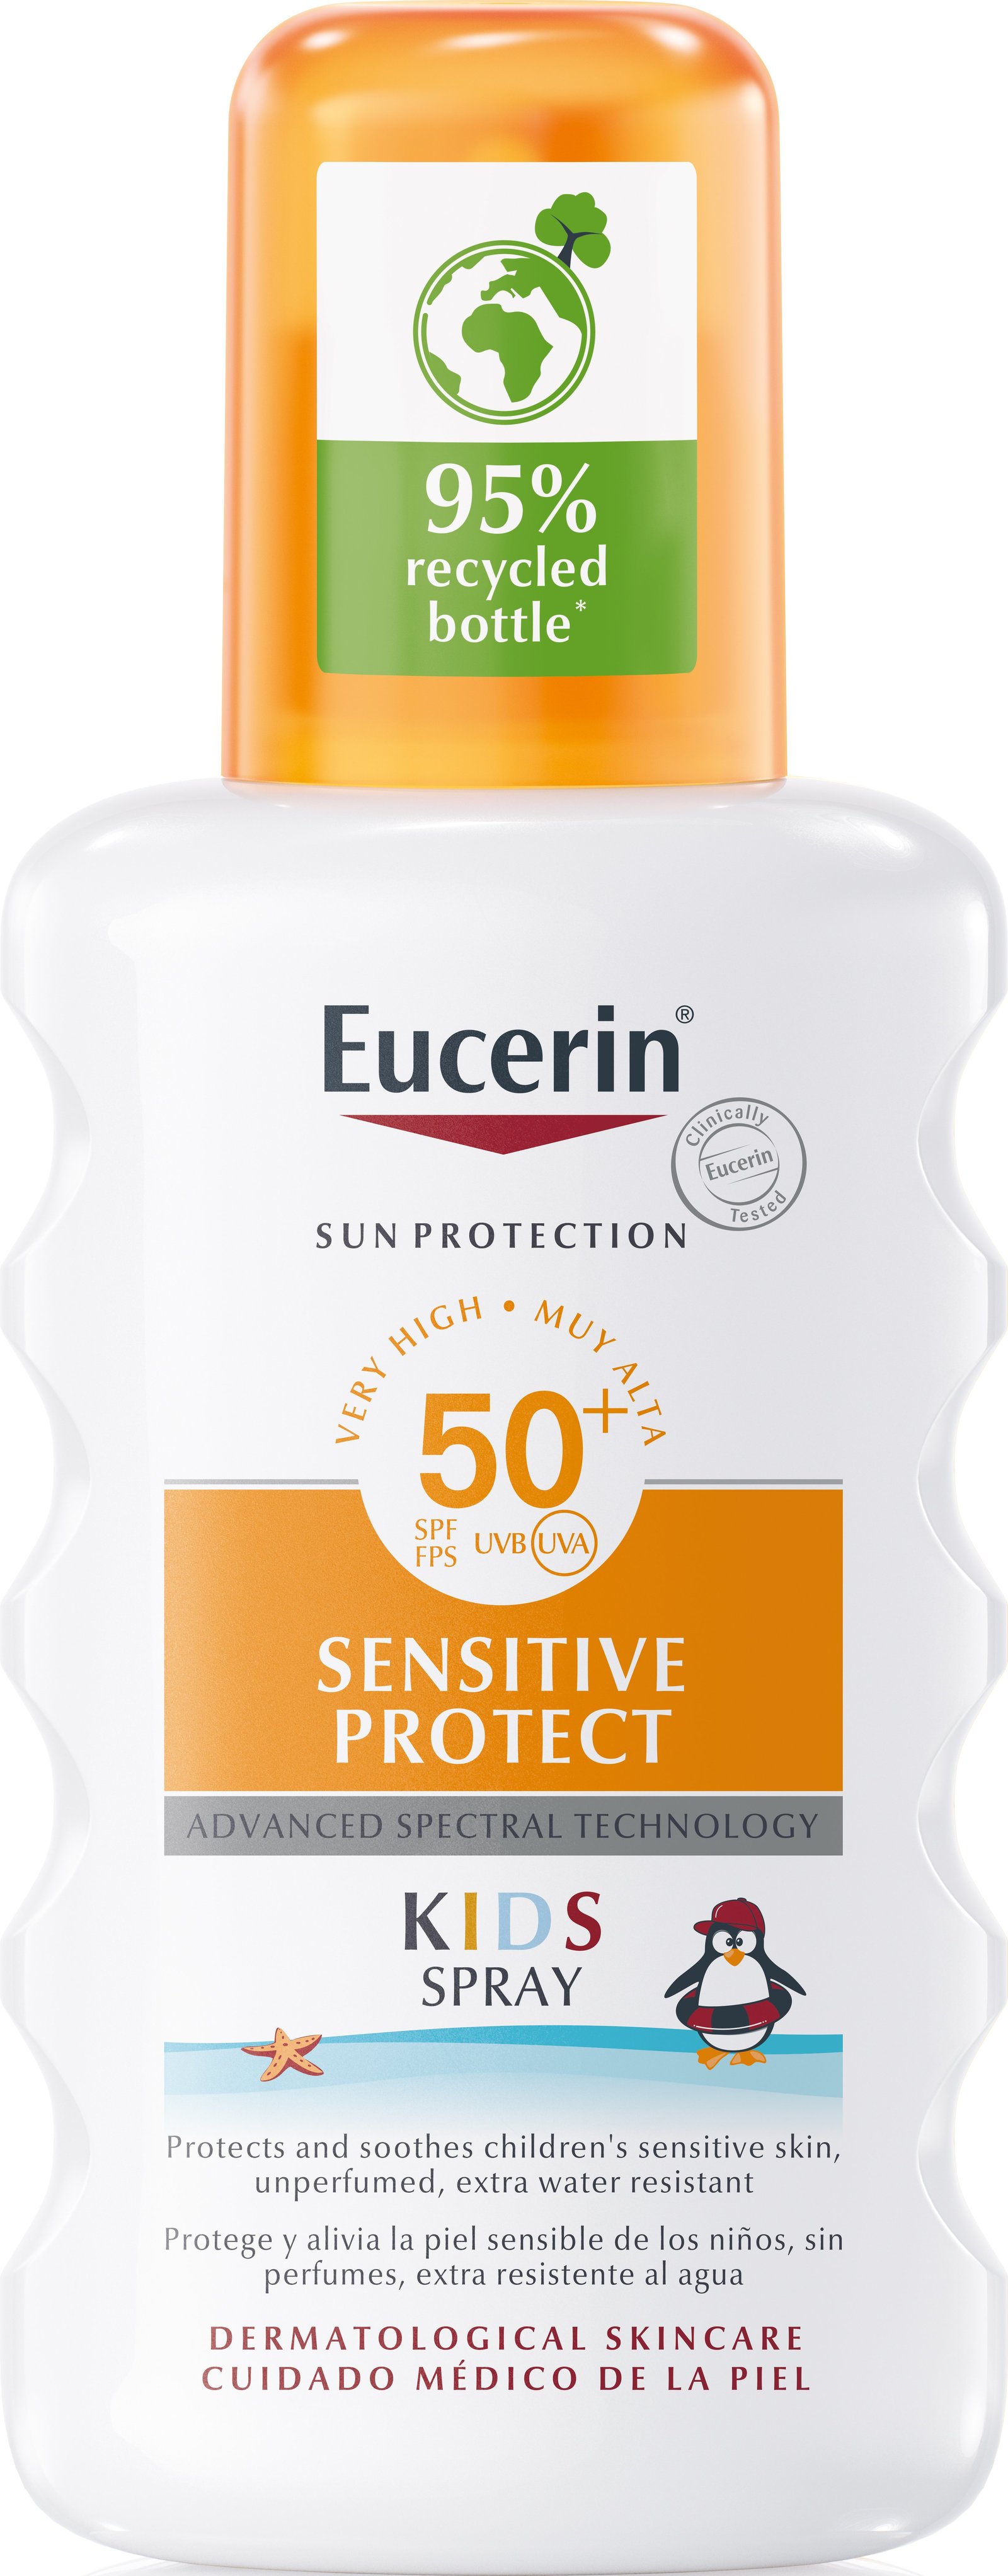 Eucerin Kids SPF50+ Sun Spray 200 ml